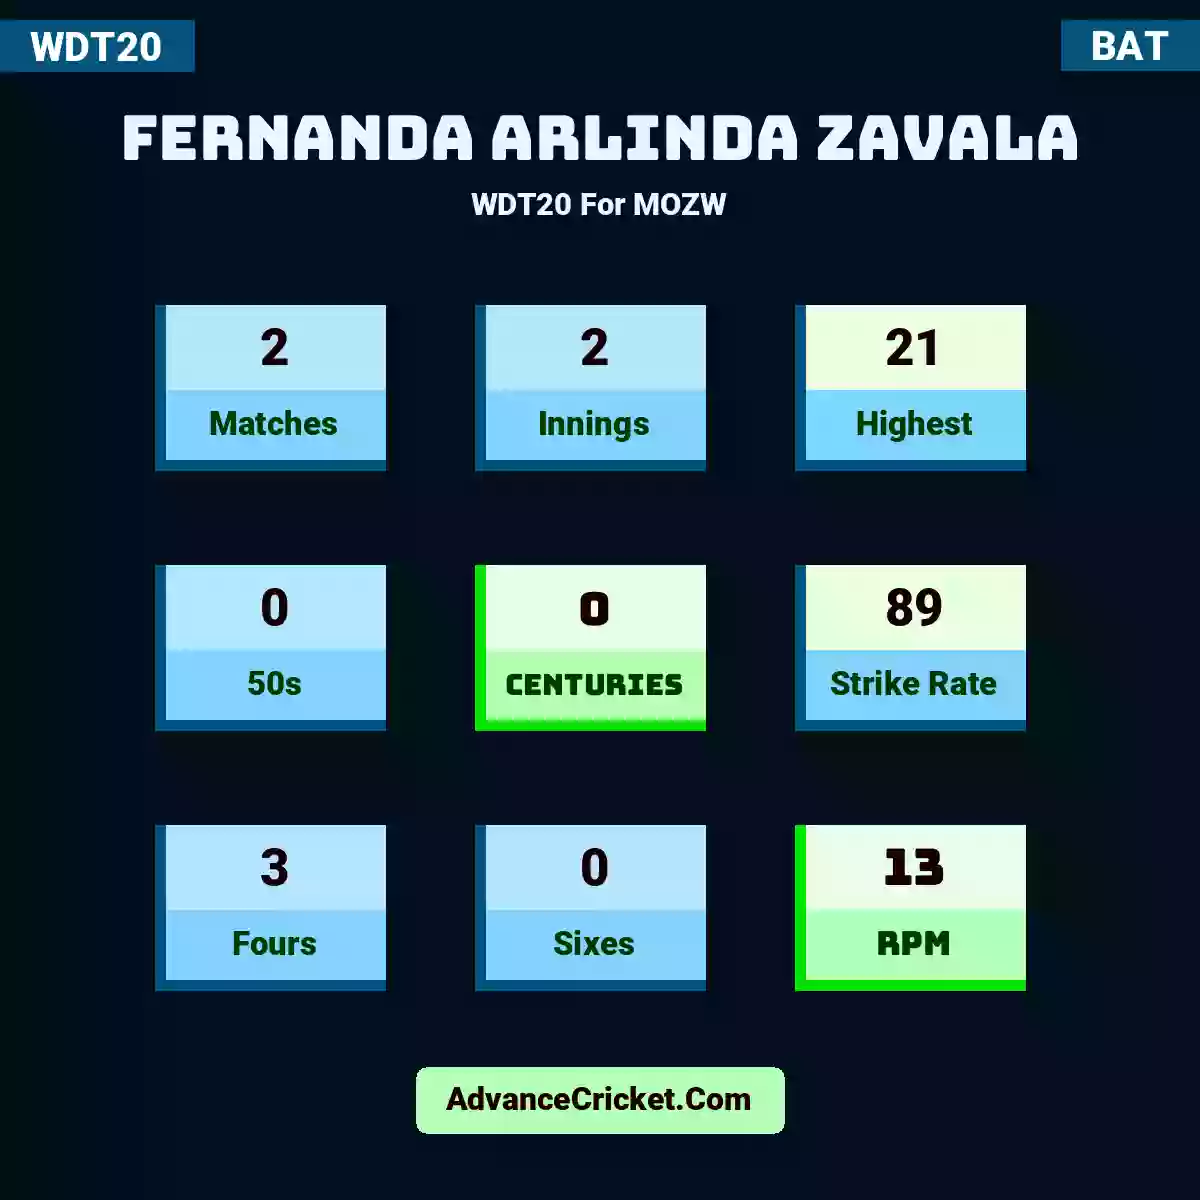 Fernanda Arlinda Zavala WDT20  For MOZW, Fernanda Arlinda Zavala played 2 matches, scored 21 runs as highest, 0 half-centuries, and 0 centuries, with a strike rate of 89. F.Arlinda.Zavala hit 3 fours and 0 sixes, with an RPM of 13.